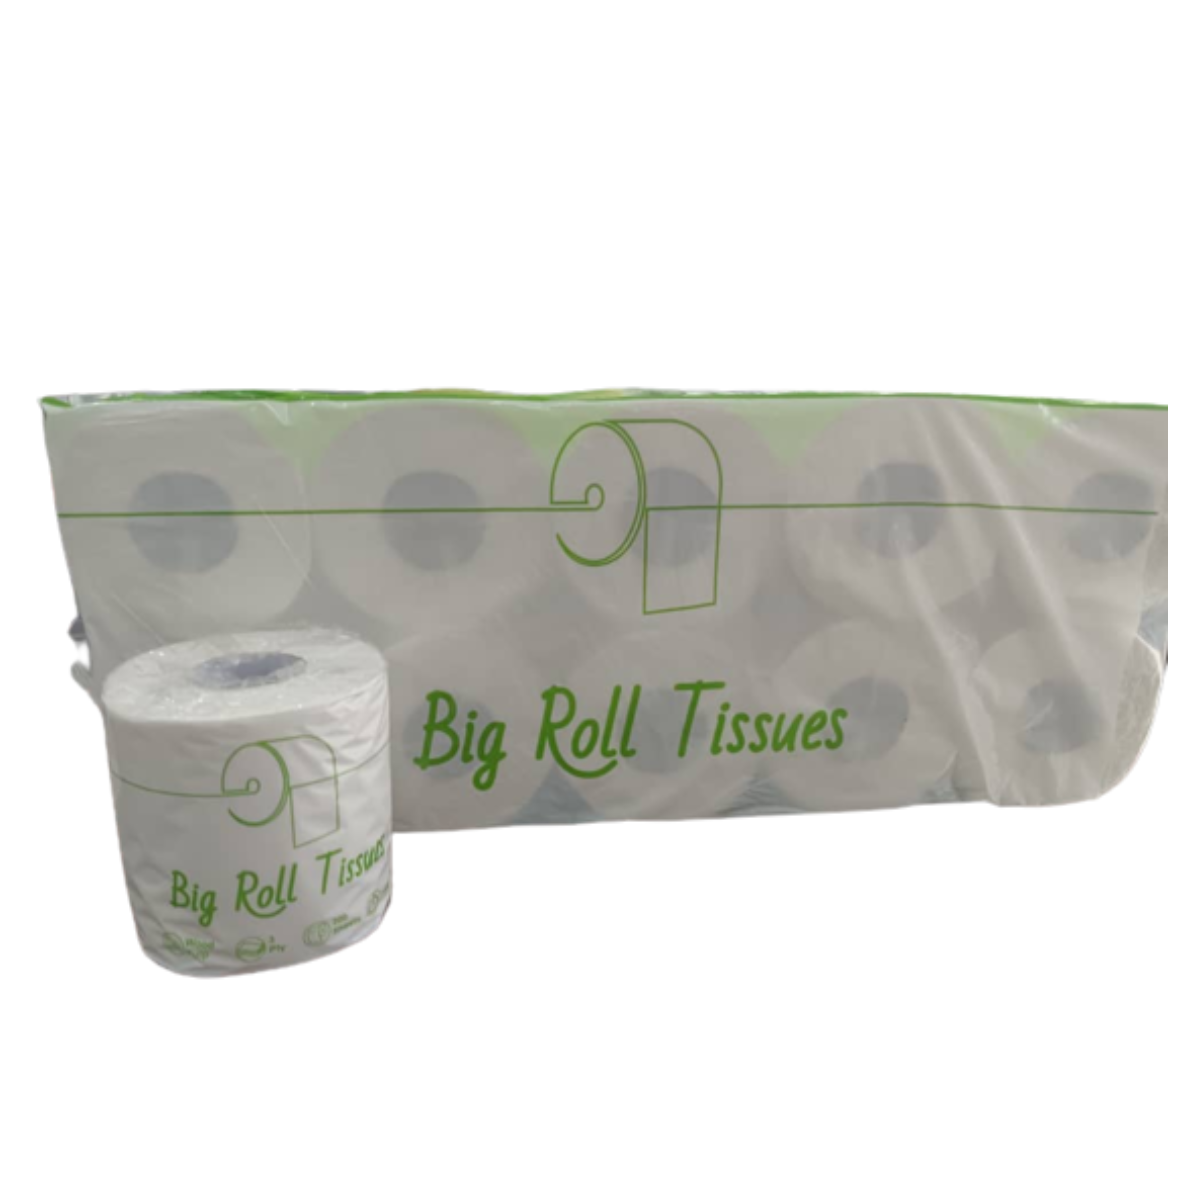 Big Roll Tissues - Pack Of 10 Rolls